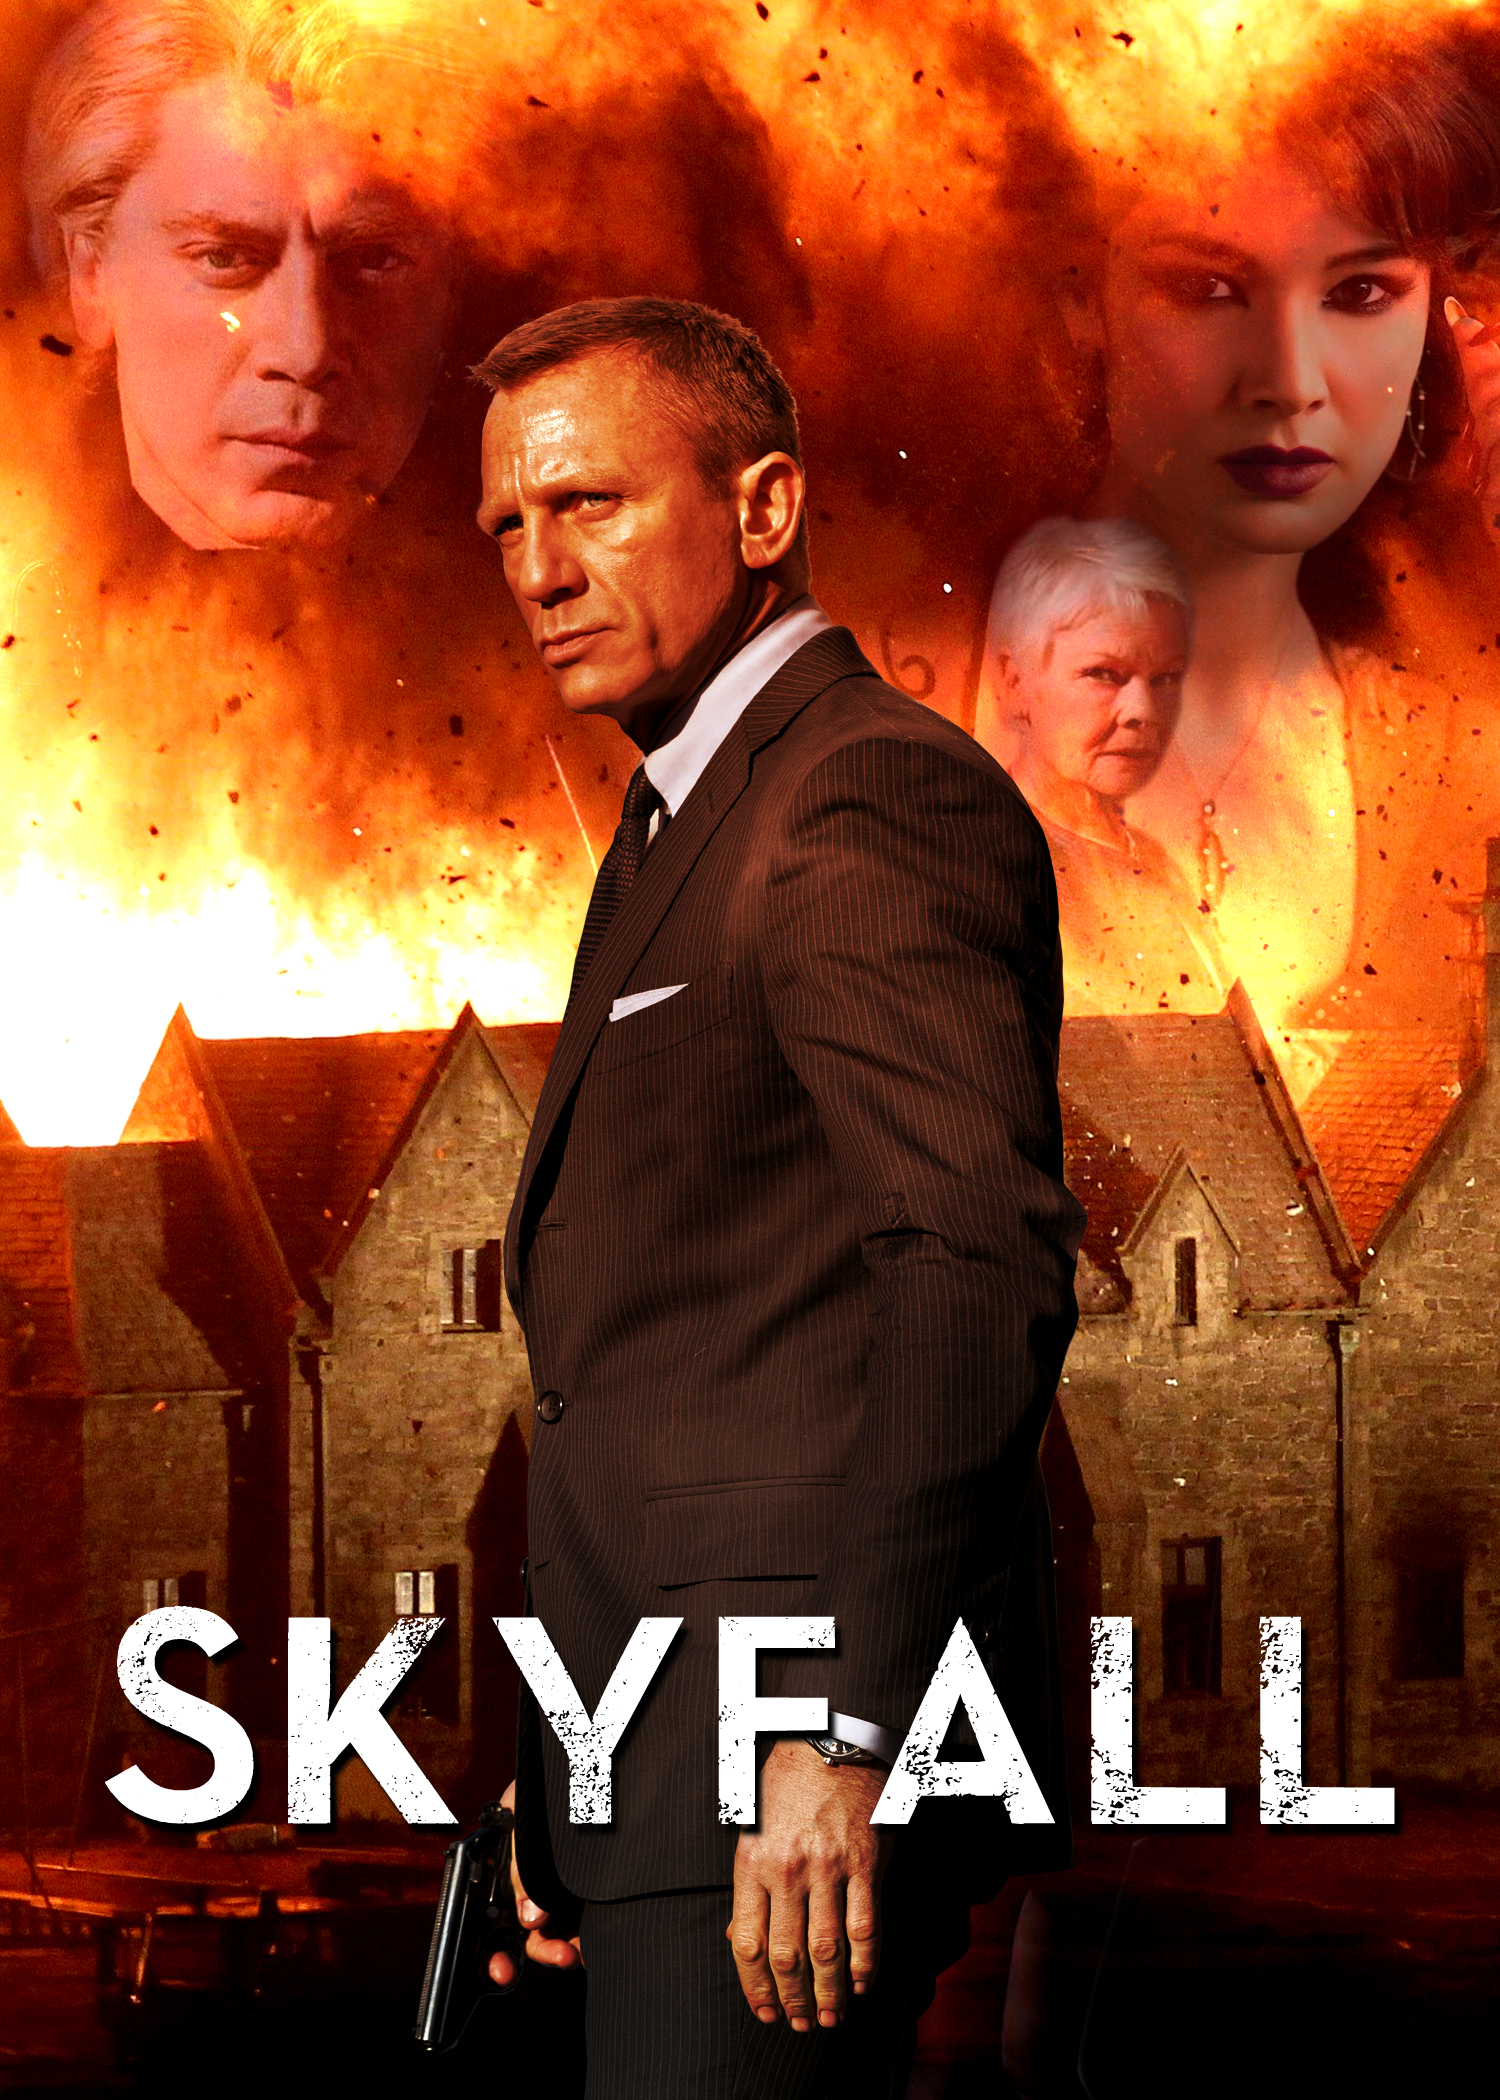 skyfall_poster_by_comandercool22-d6aicvb.jpg